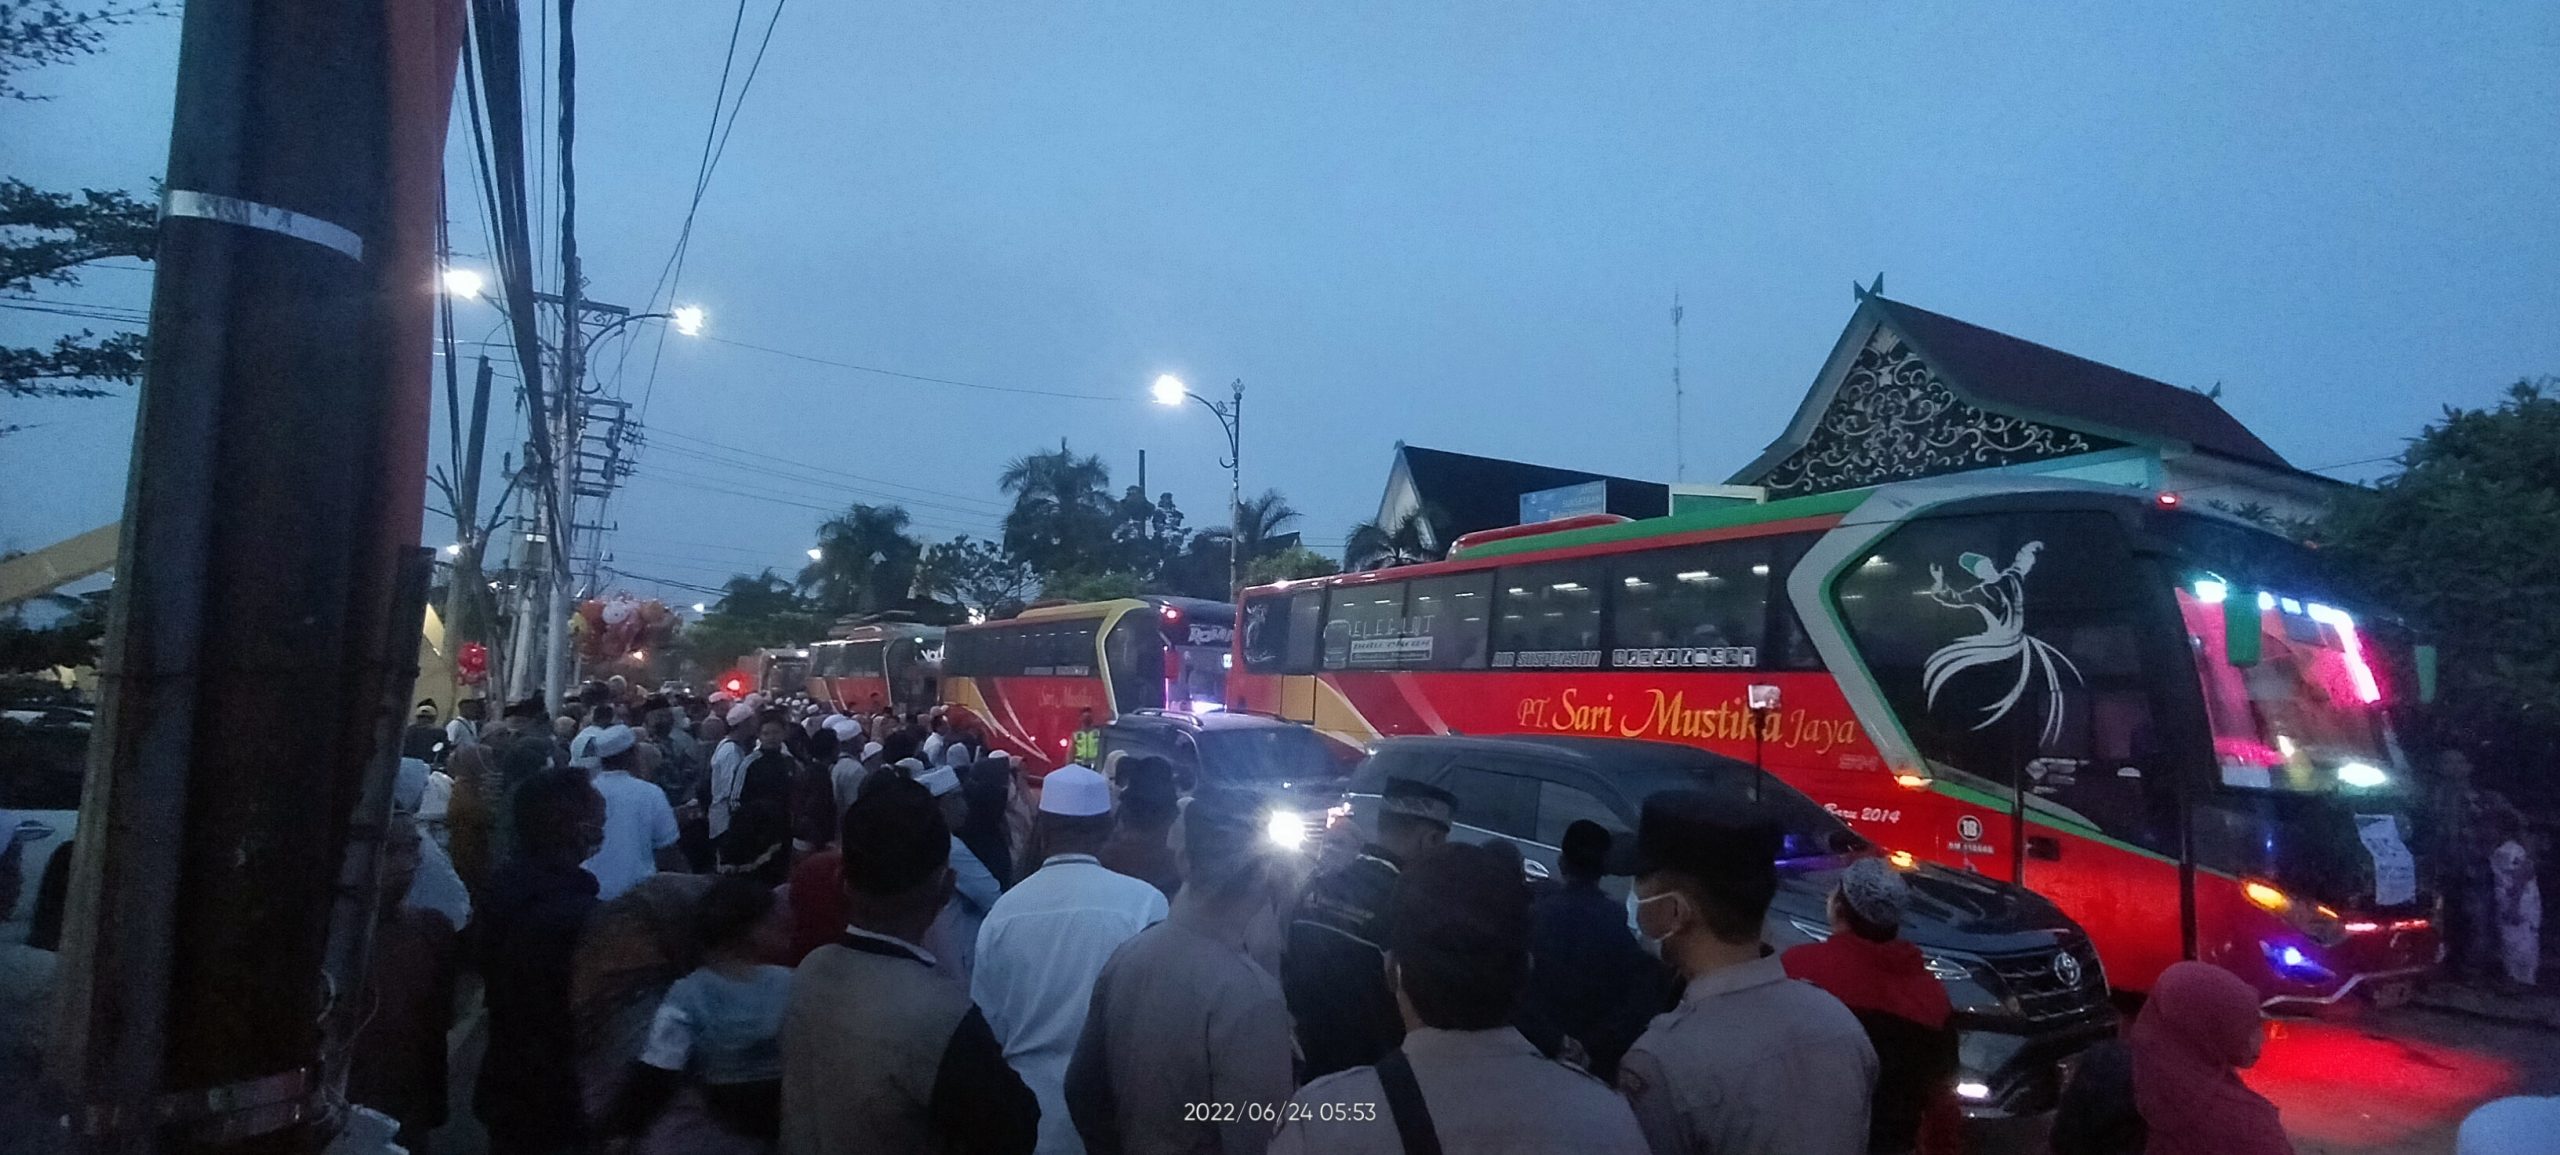 Calon Jamaah Haji Berangkat Menggunakan 4 Bus Berwarna Merah